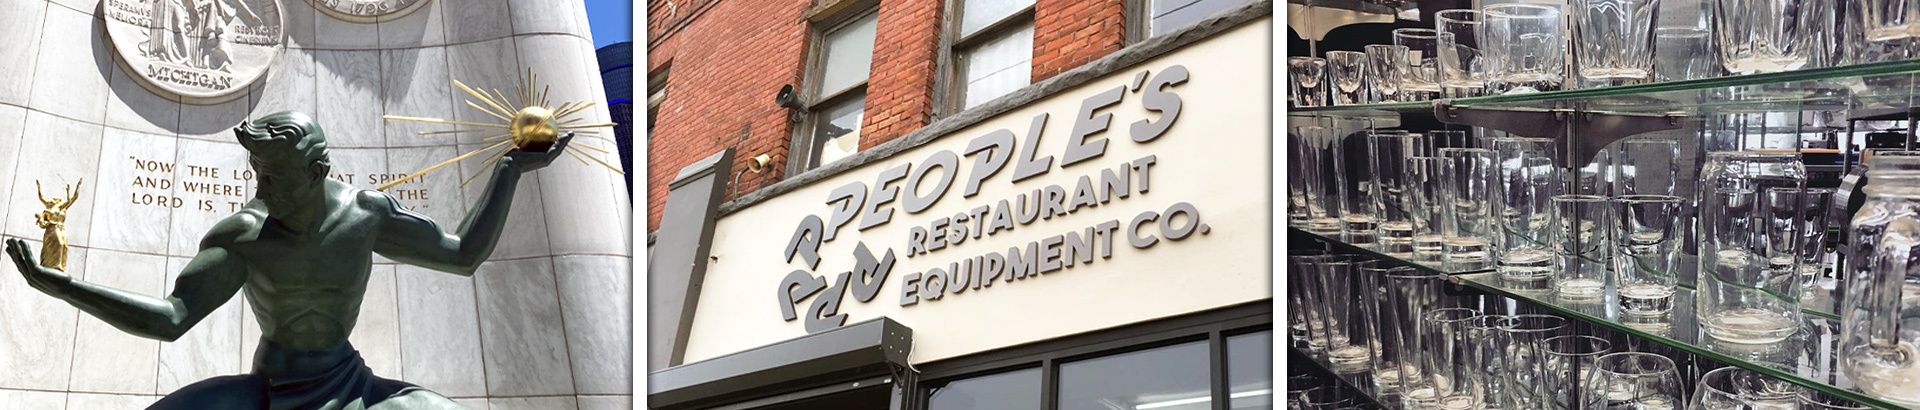 People's Restaurant Equipment Co. 